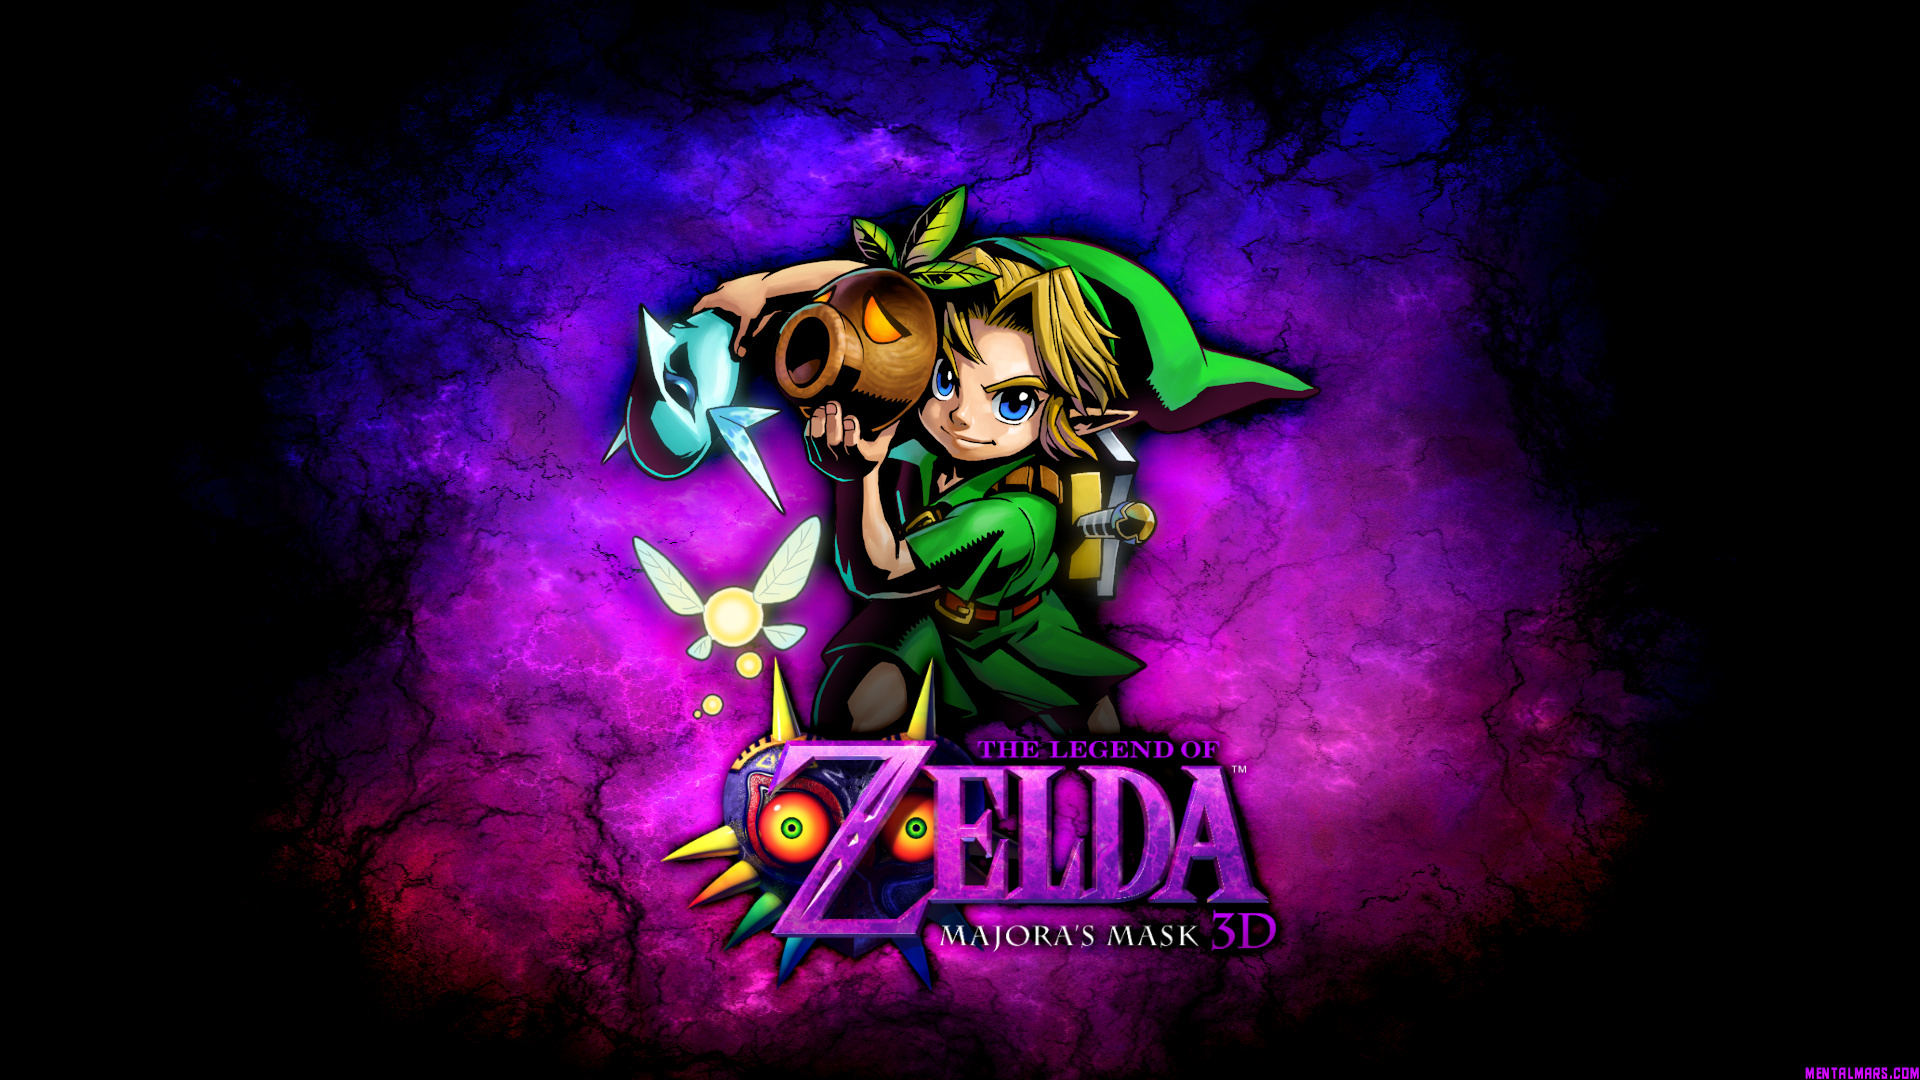 Download Wallpaper - Posters De The Legend Of Zelda Majora's Mask , HD Wallpaper & Backgrounds